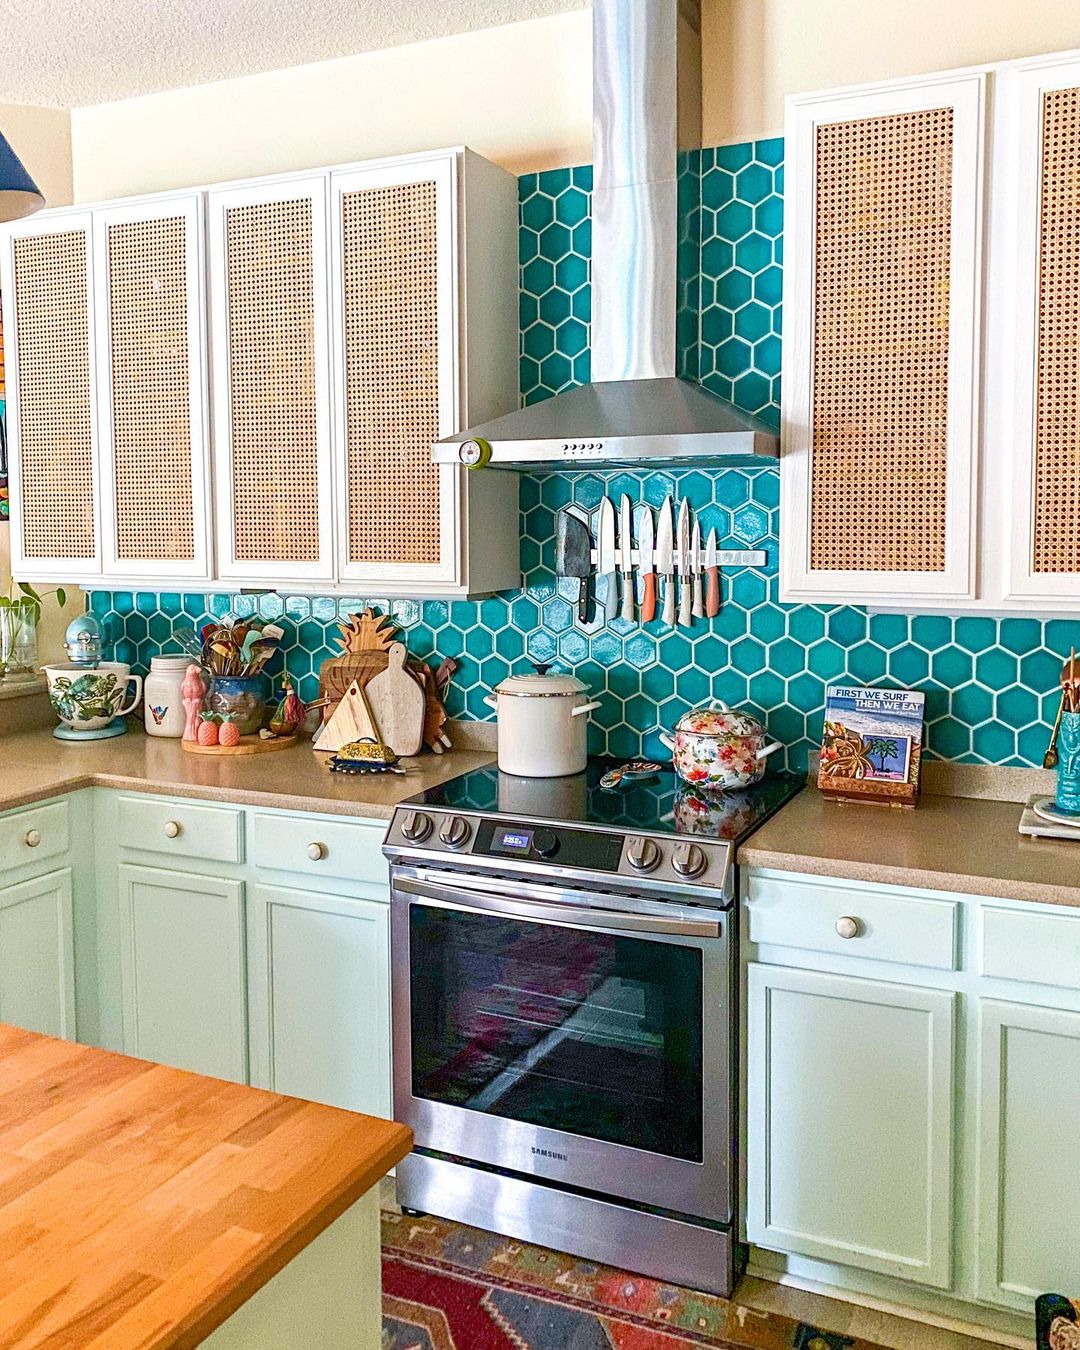 Updated Kitchen with Blue Tile Backsplash. Photo by Instagram user @mango_manor